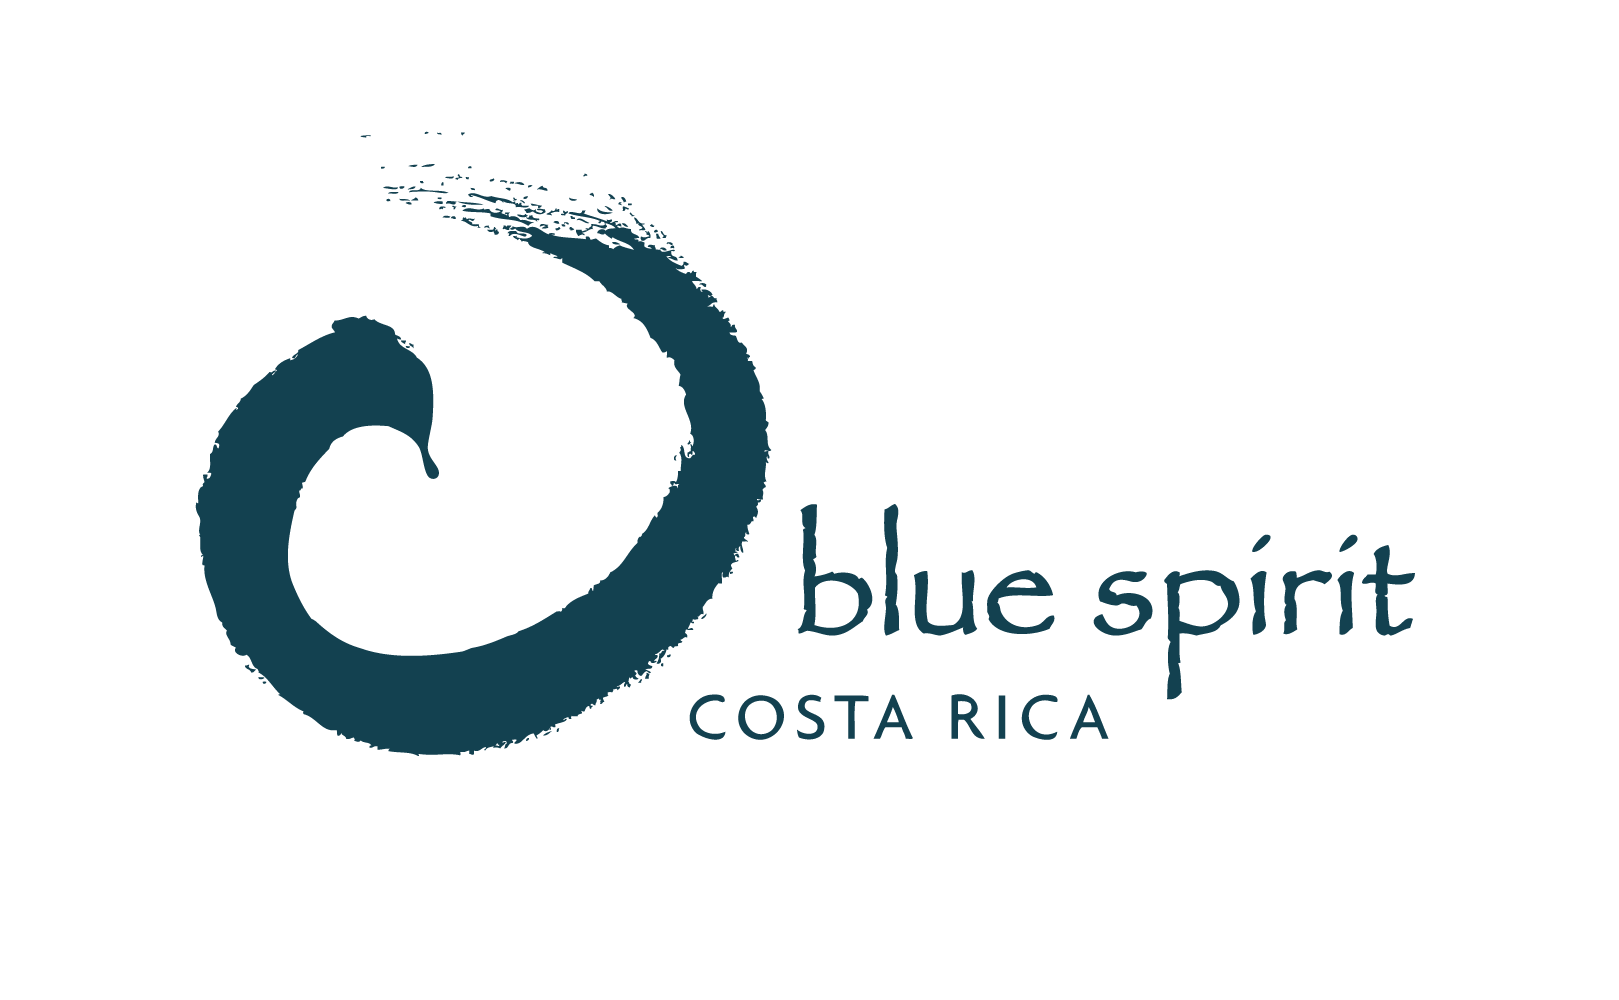 Thanks to our sponsor - Blue Spirit Costa Rica